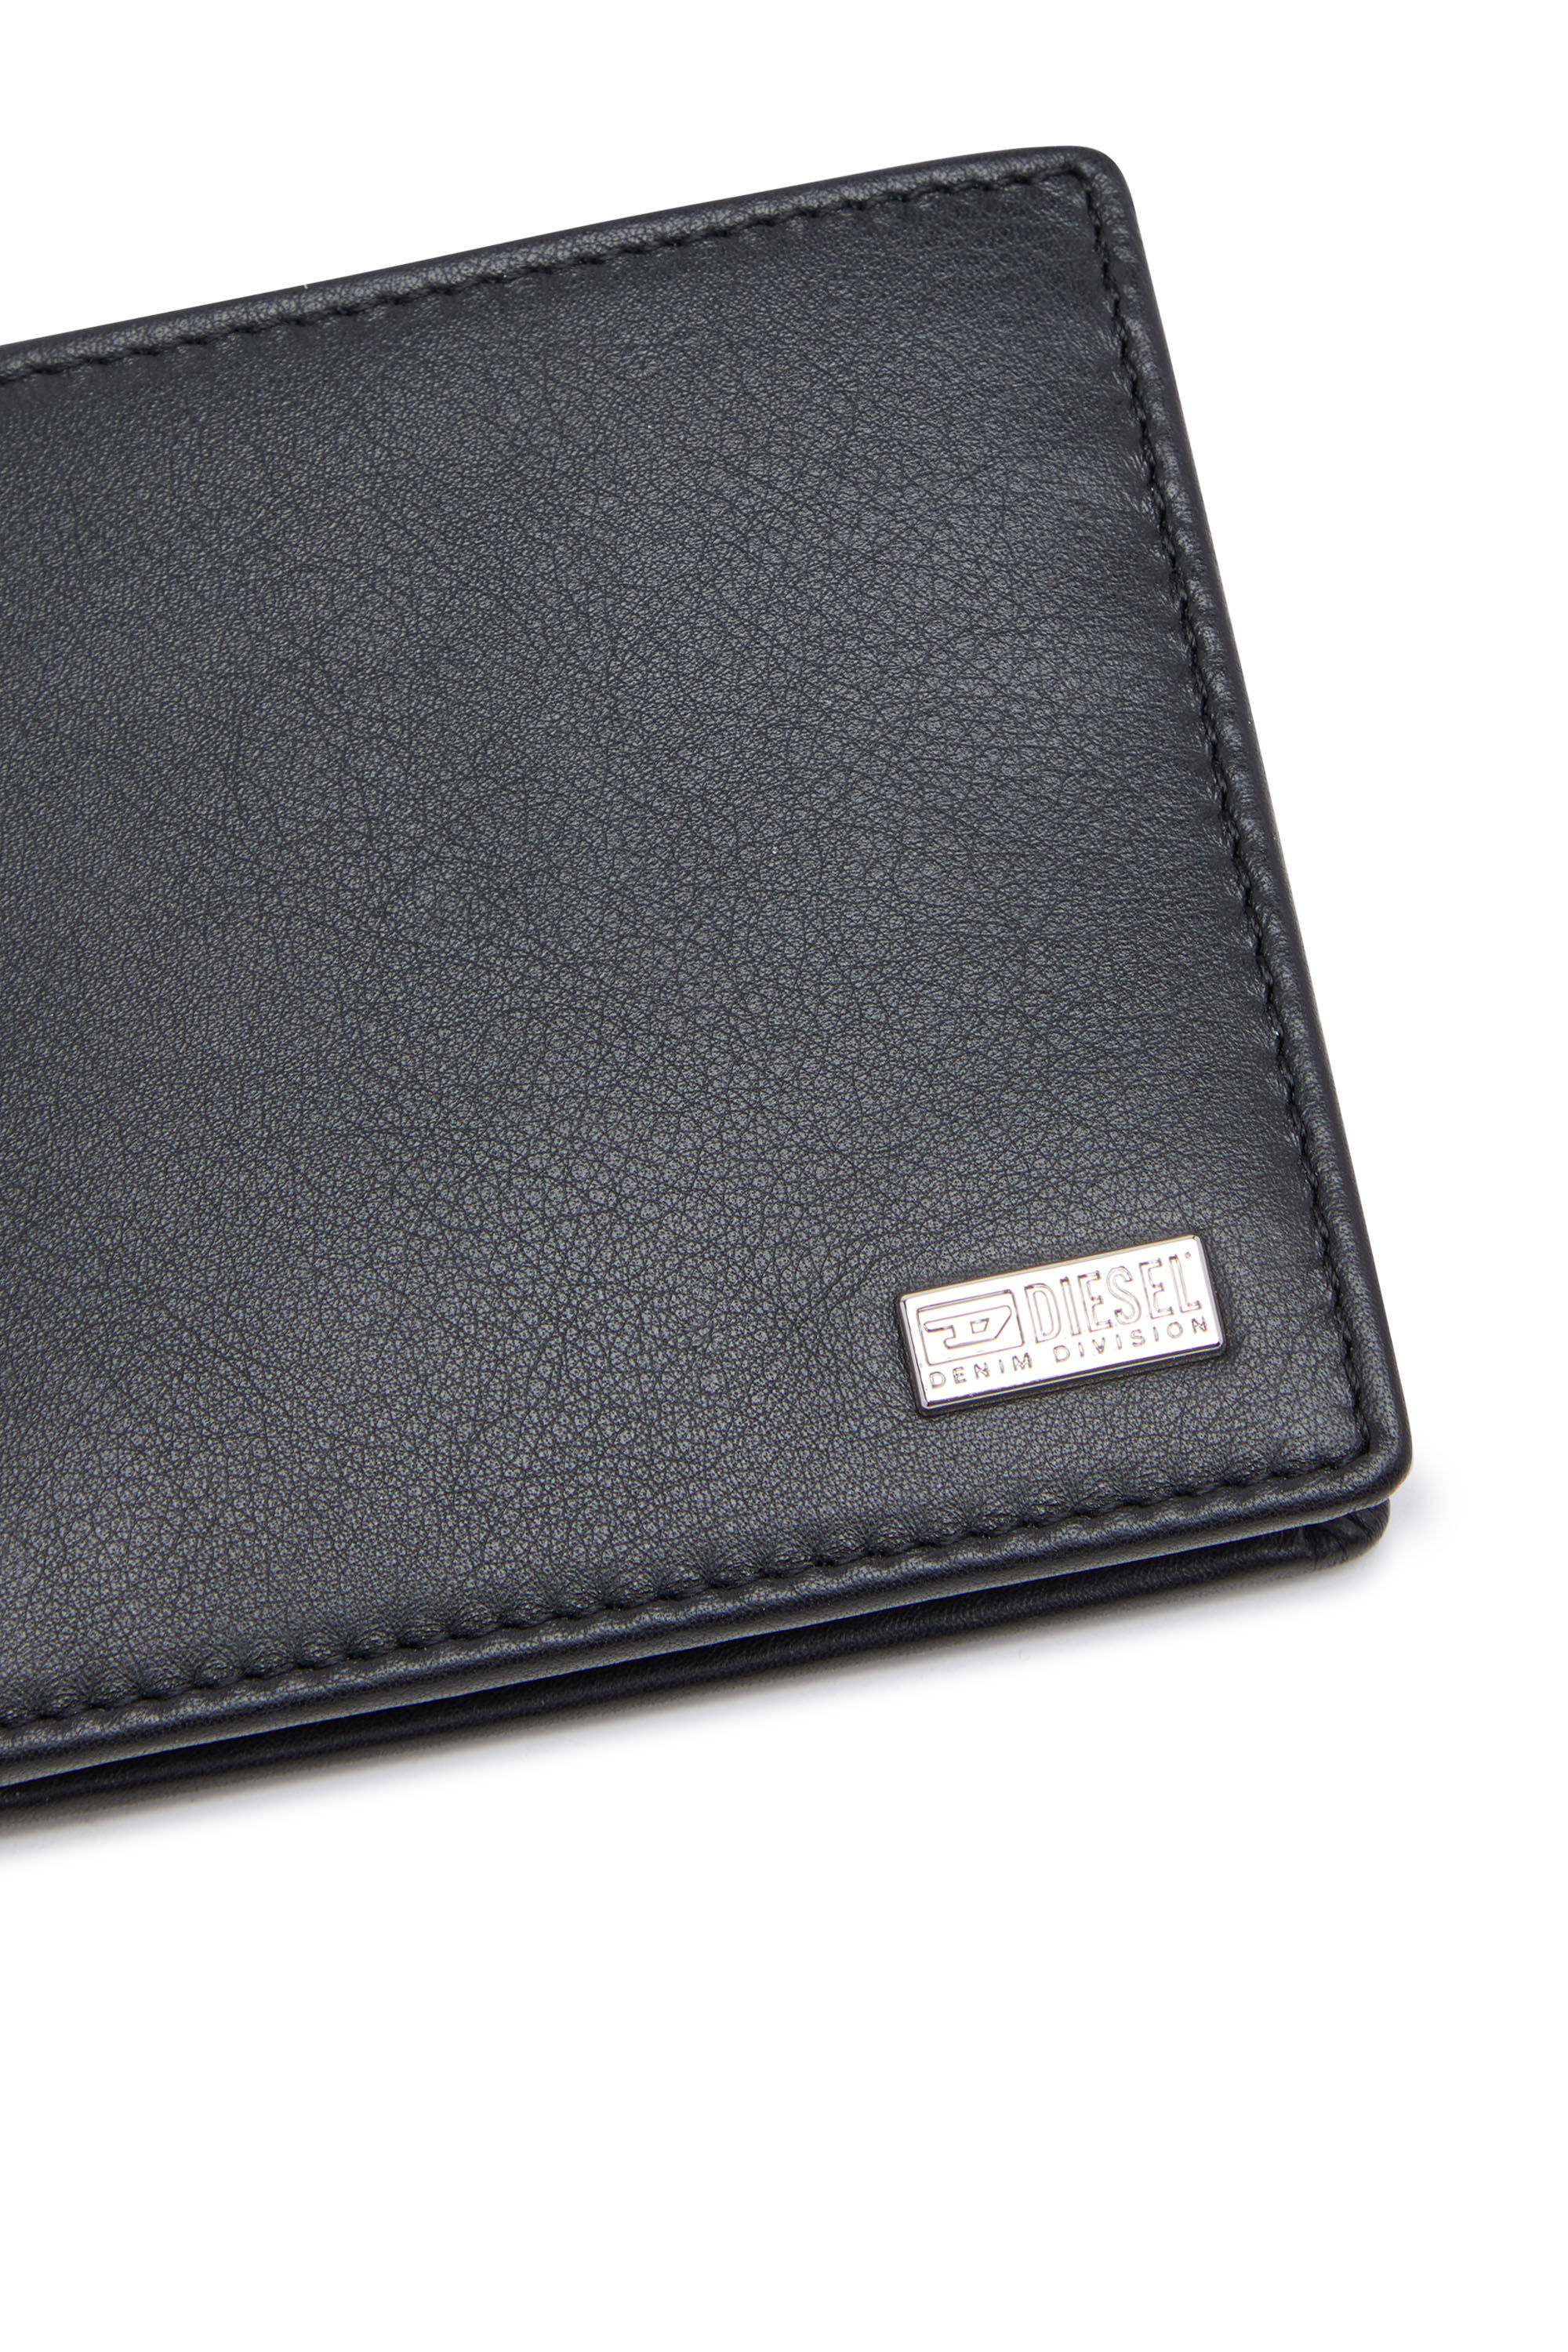 DIESEL Bi-Fold Coin S 新品付属品箱ありギャランティーあり